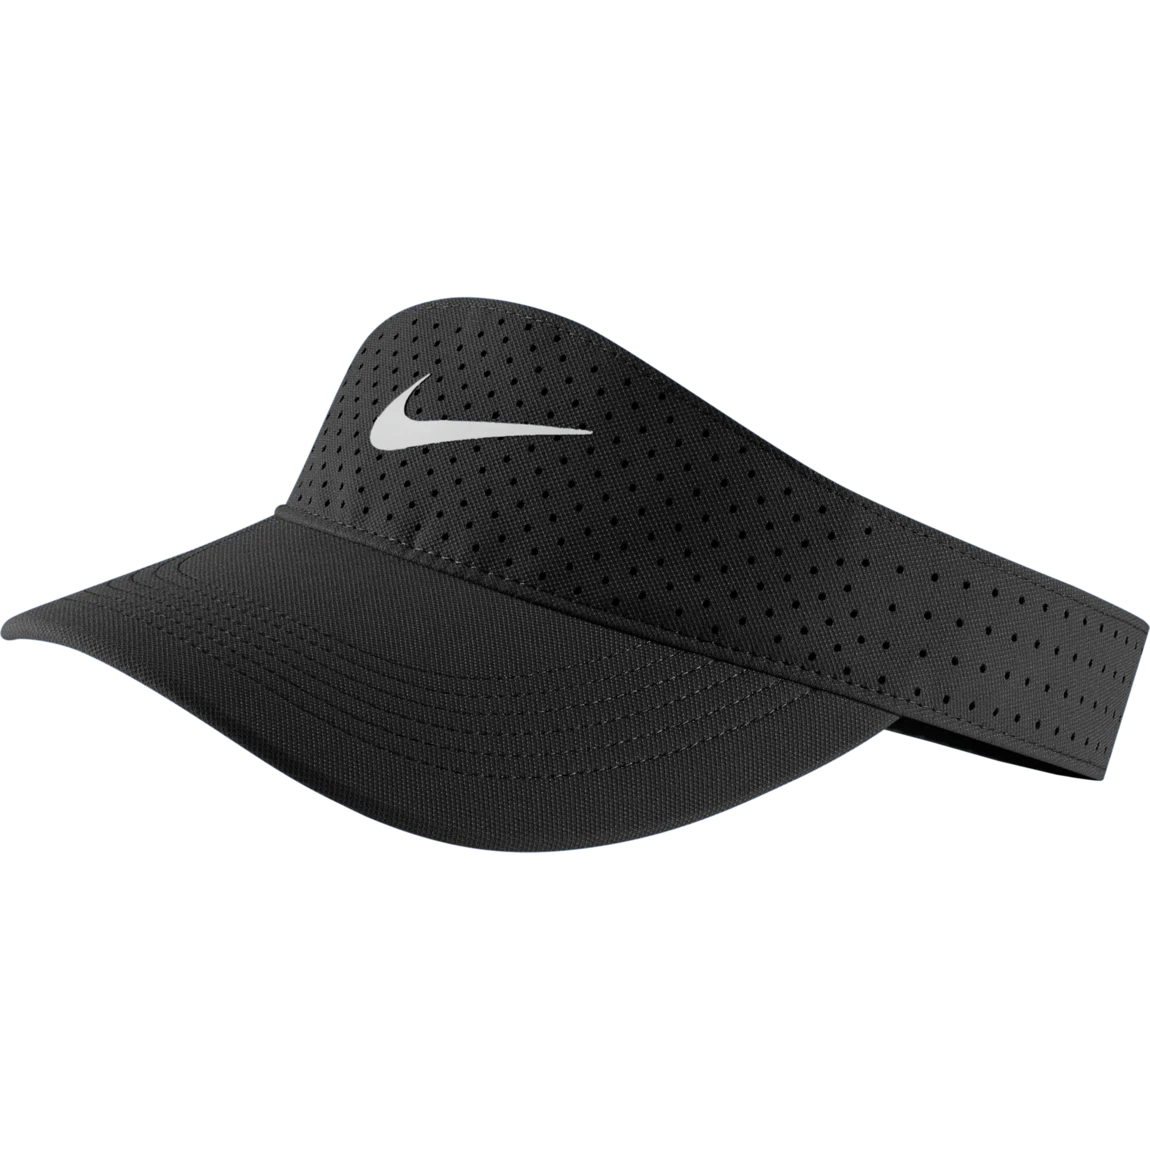 Nike Unisex AeroBill Running Visor